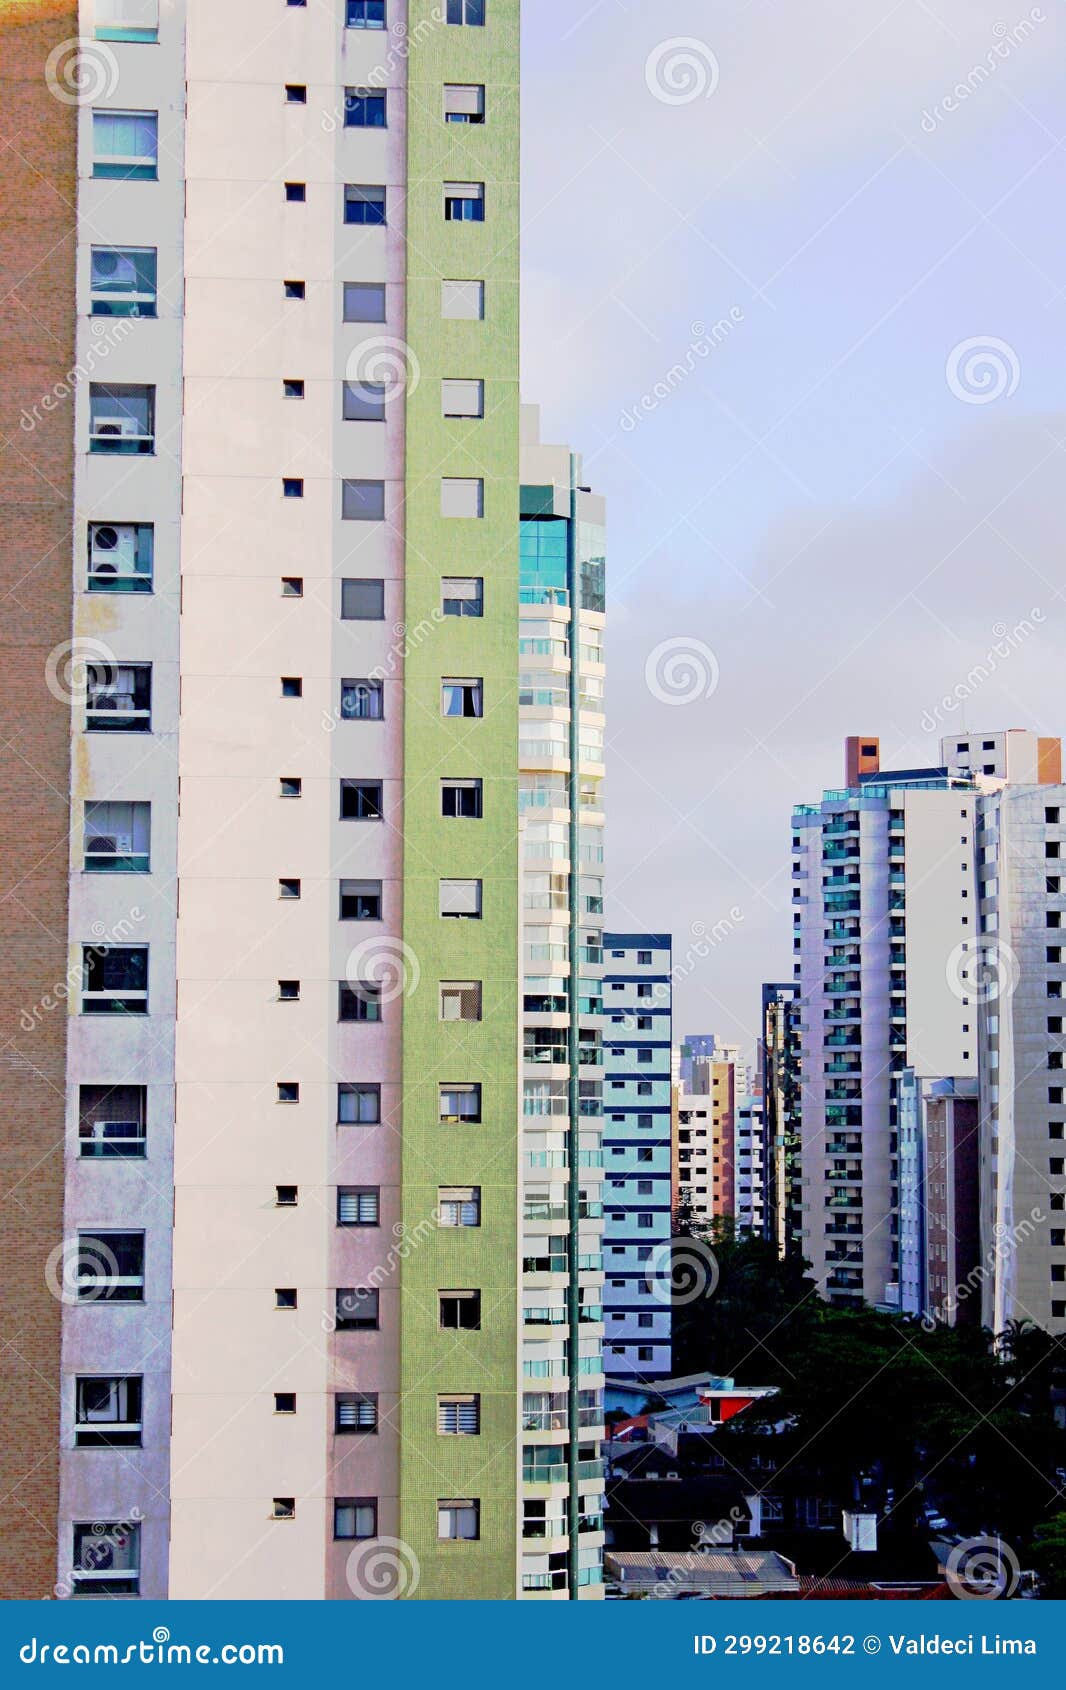 apartment buildings on big city, santo andre, sao paulo state, brazil